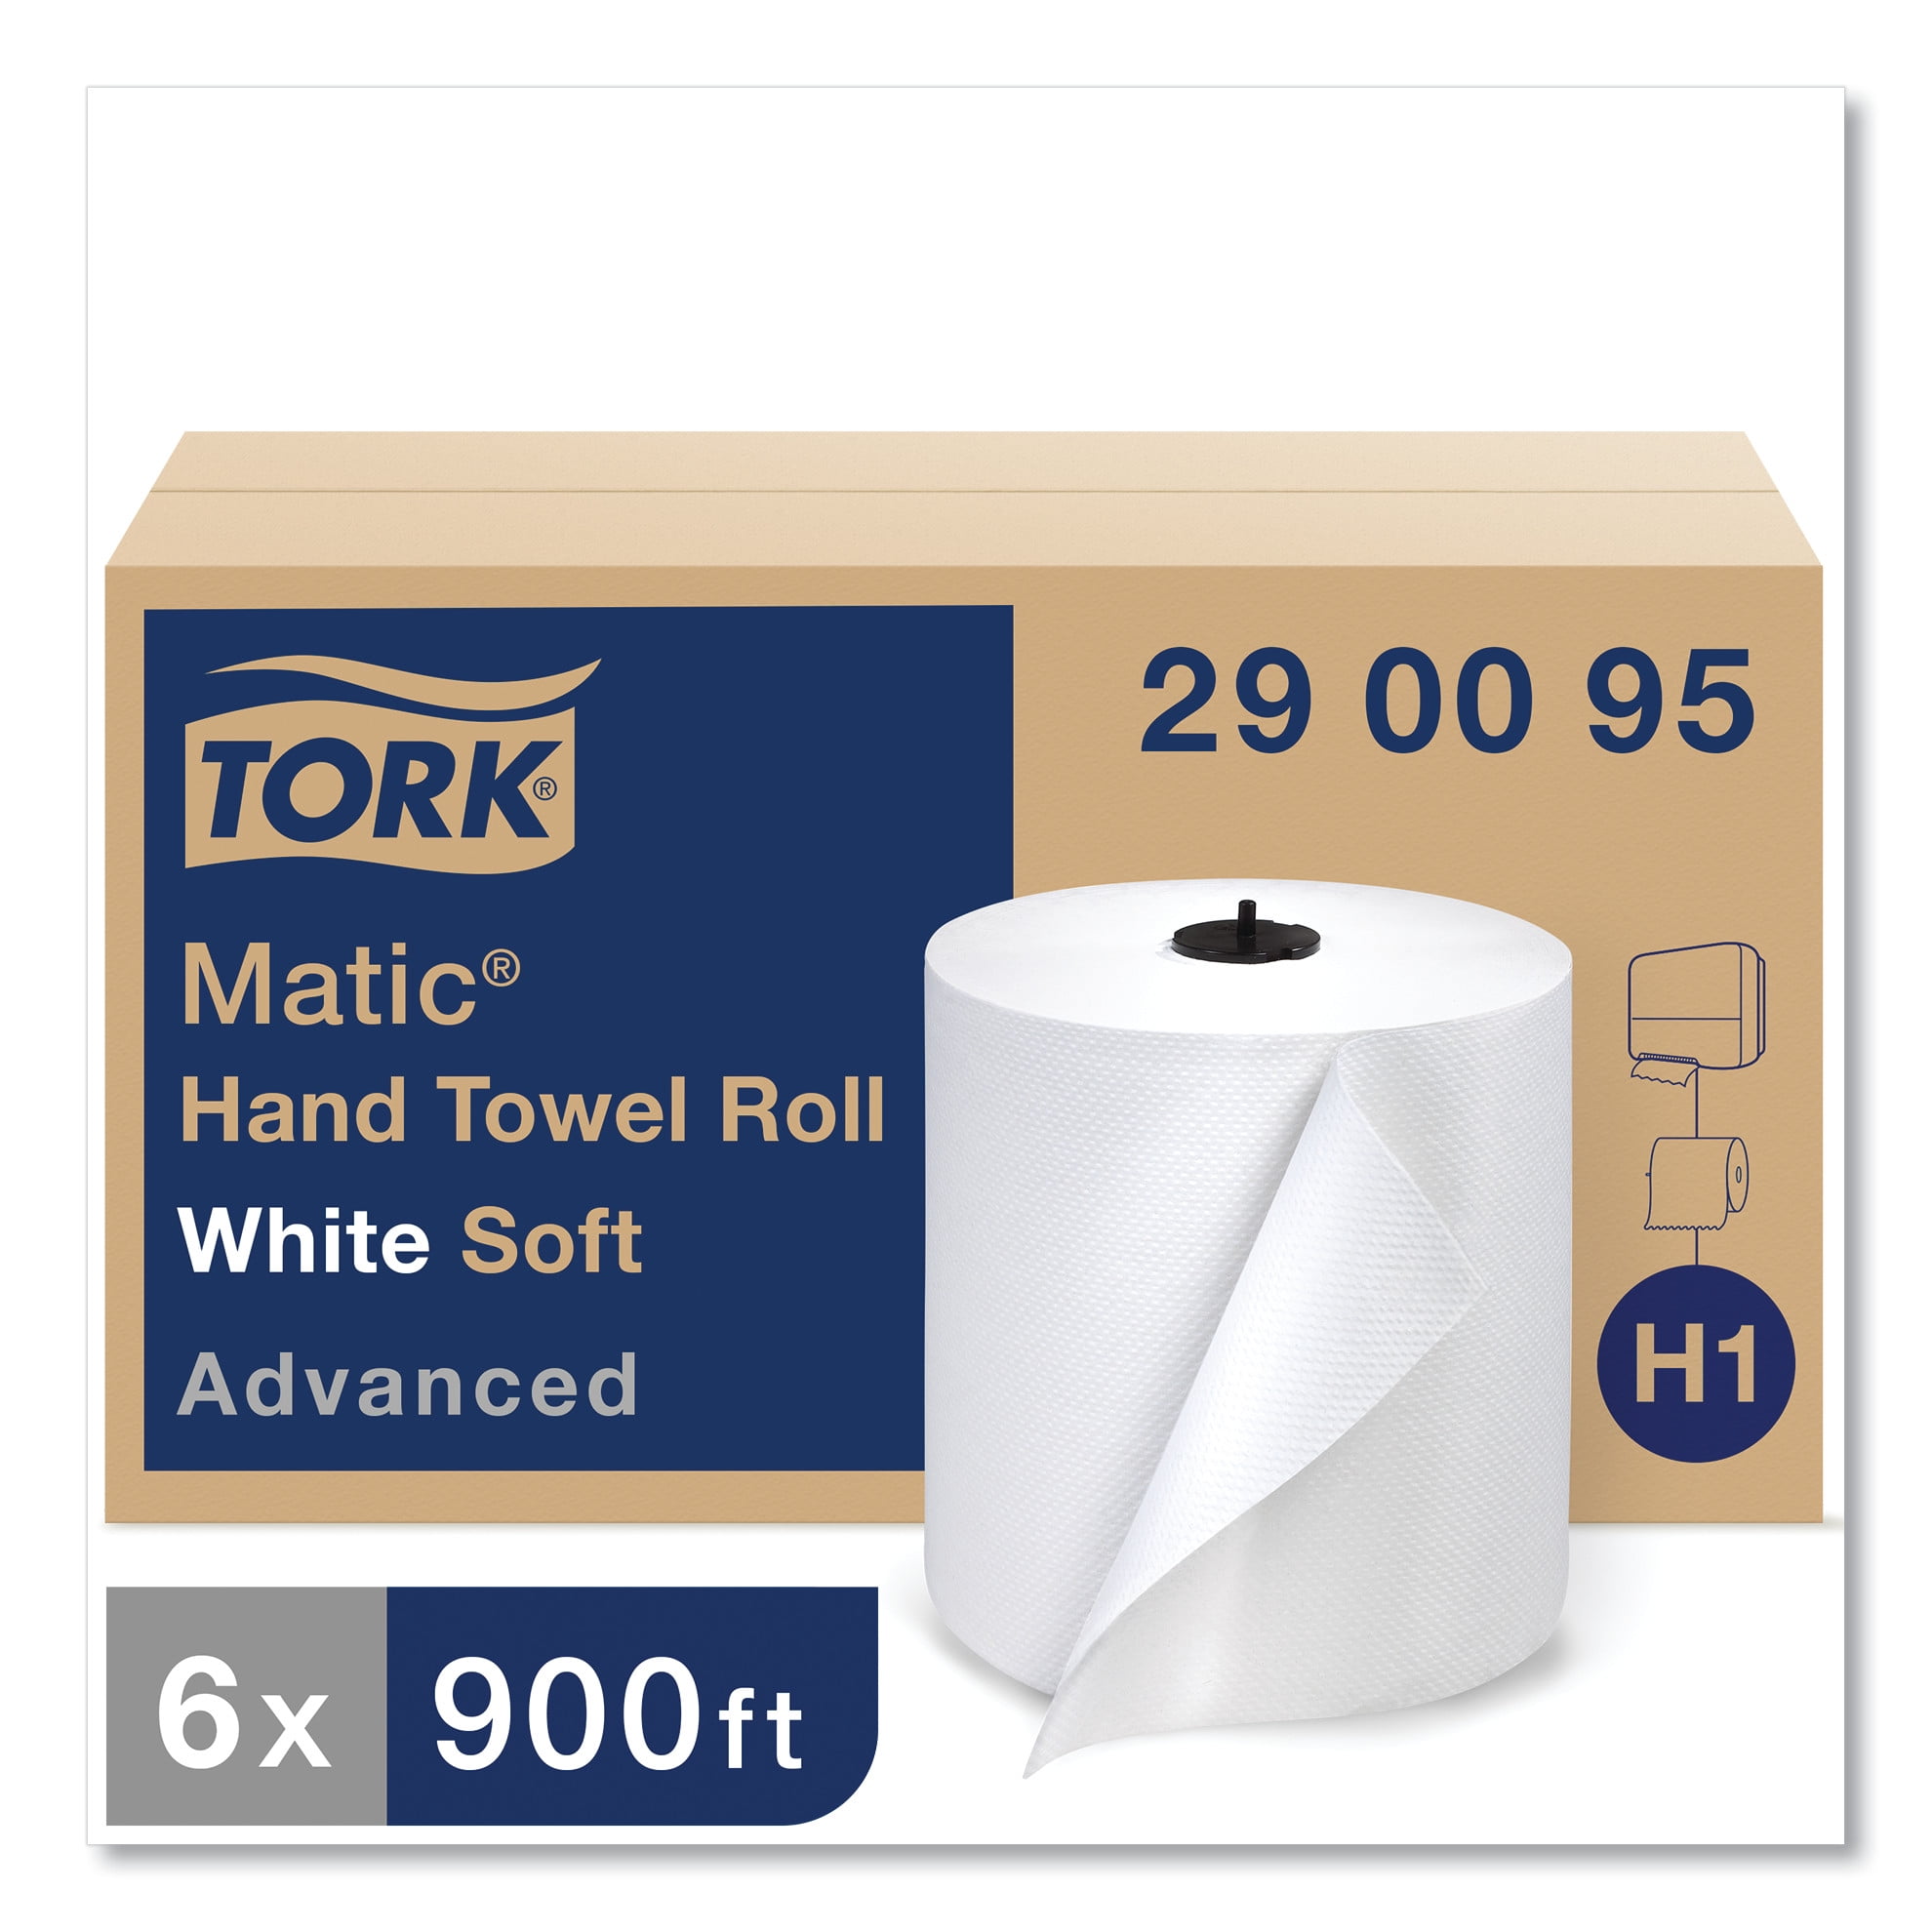 Полотенце бумажное tork advanced. Tork matic h1. Торк матик hand Towel Roll диспенсер. Полотенца бумажные рулонные. Бумага полотенце в рулонах.